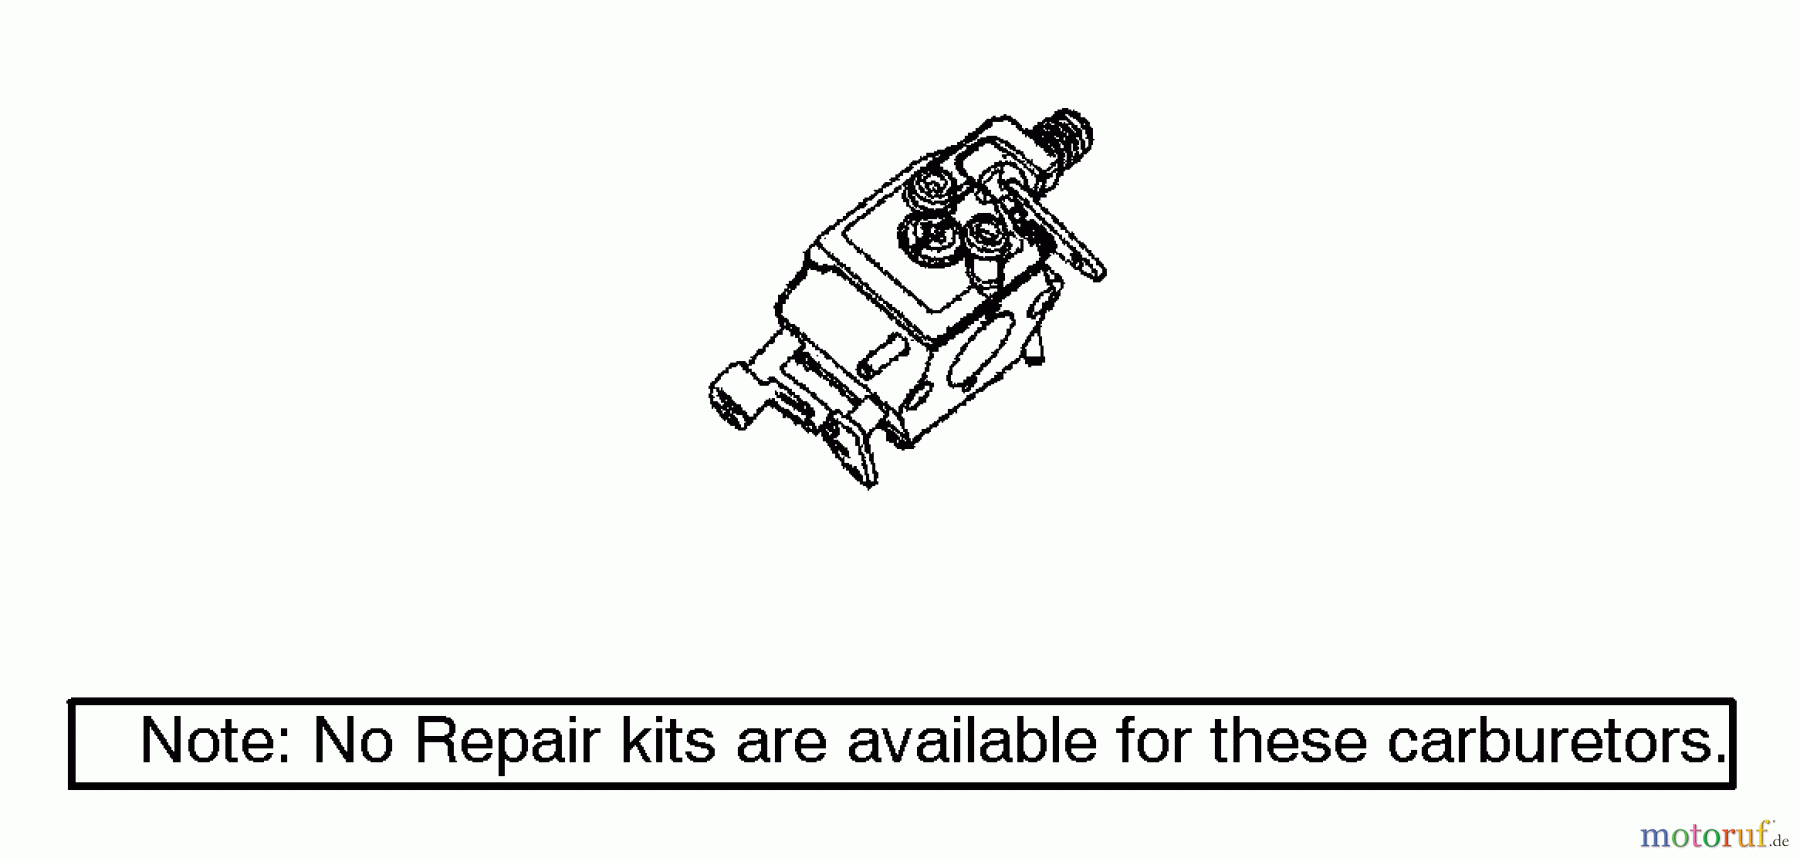  Poulan / Weed Eater Motorsägen 2050 (Type 4) - Poulan Pioneer Chainsaw Carburetor Assembly Kits 530071620/530071820/530071821